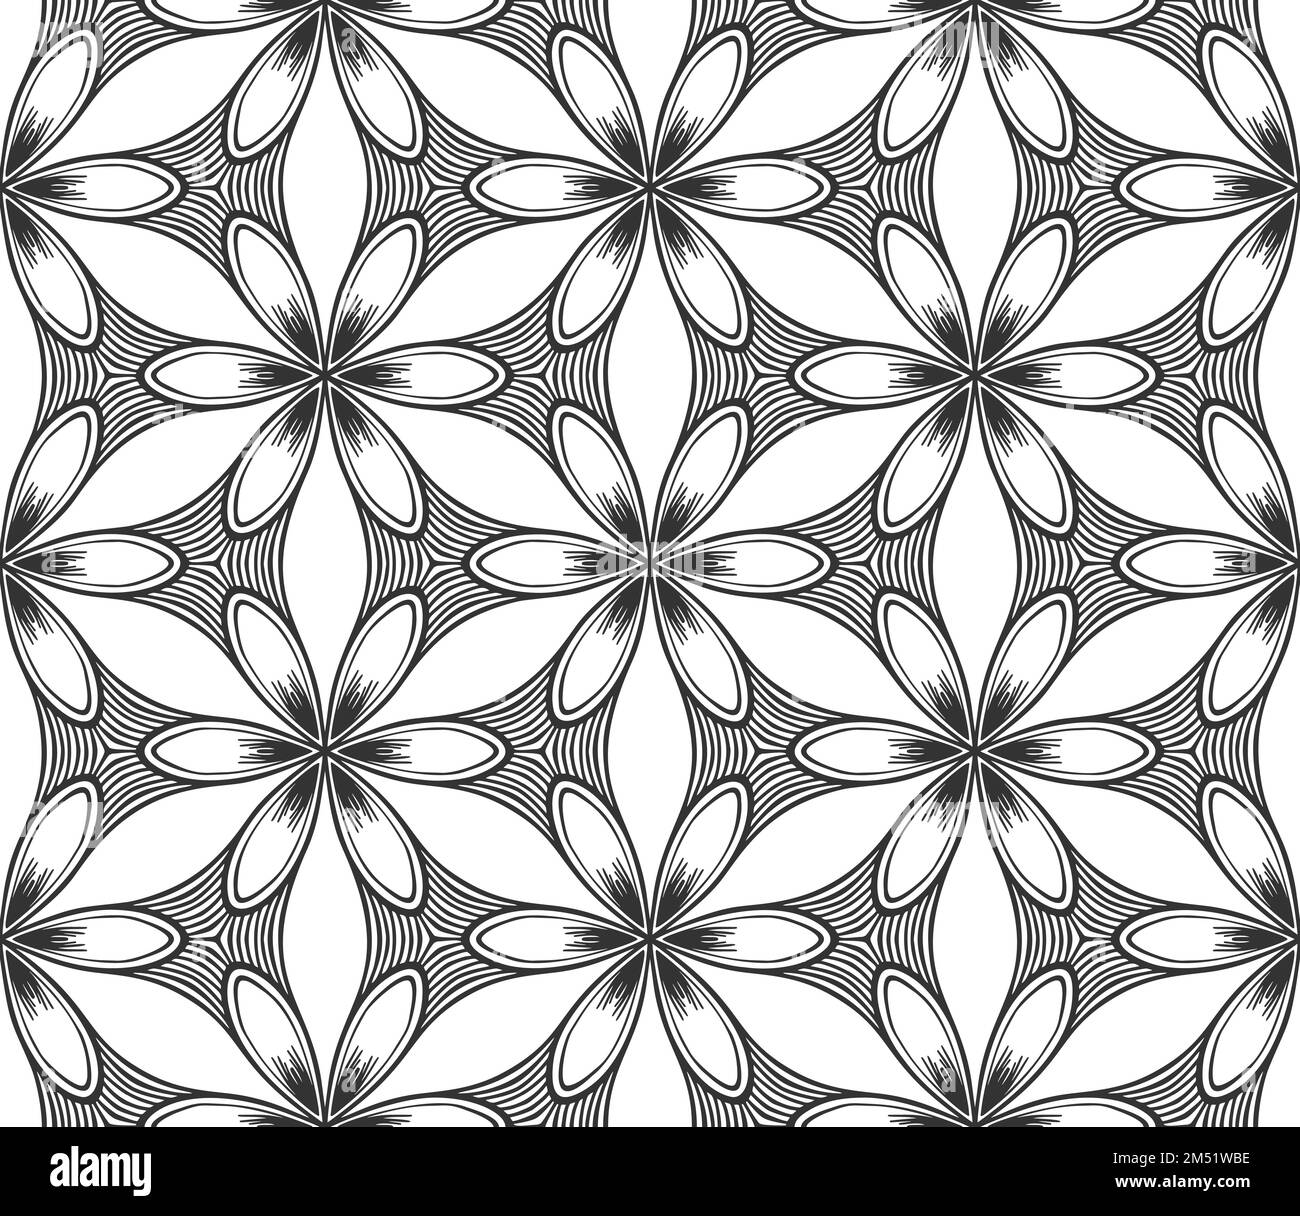 black on white floral print fabric texture Stock Photo - Alamy